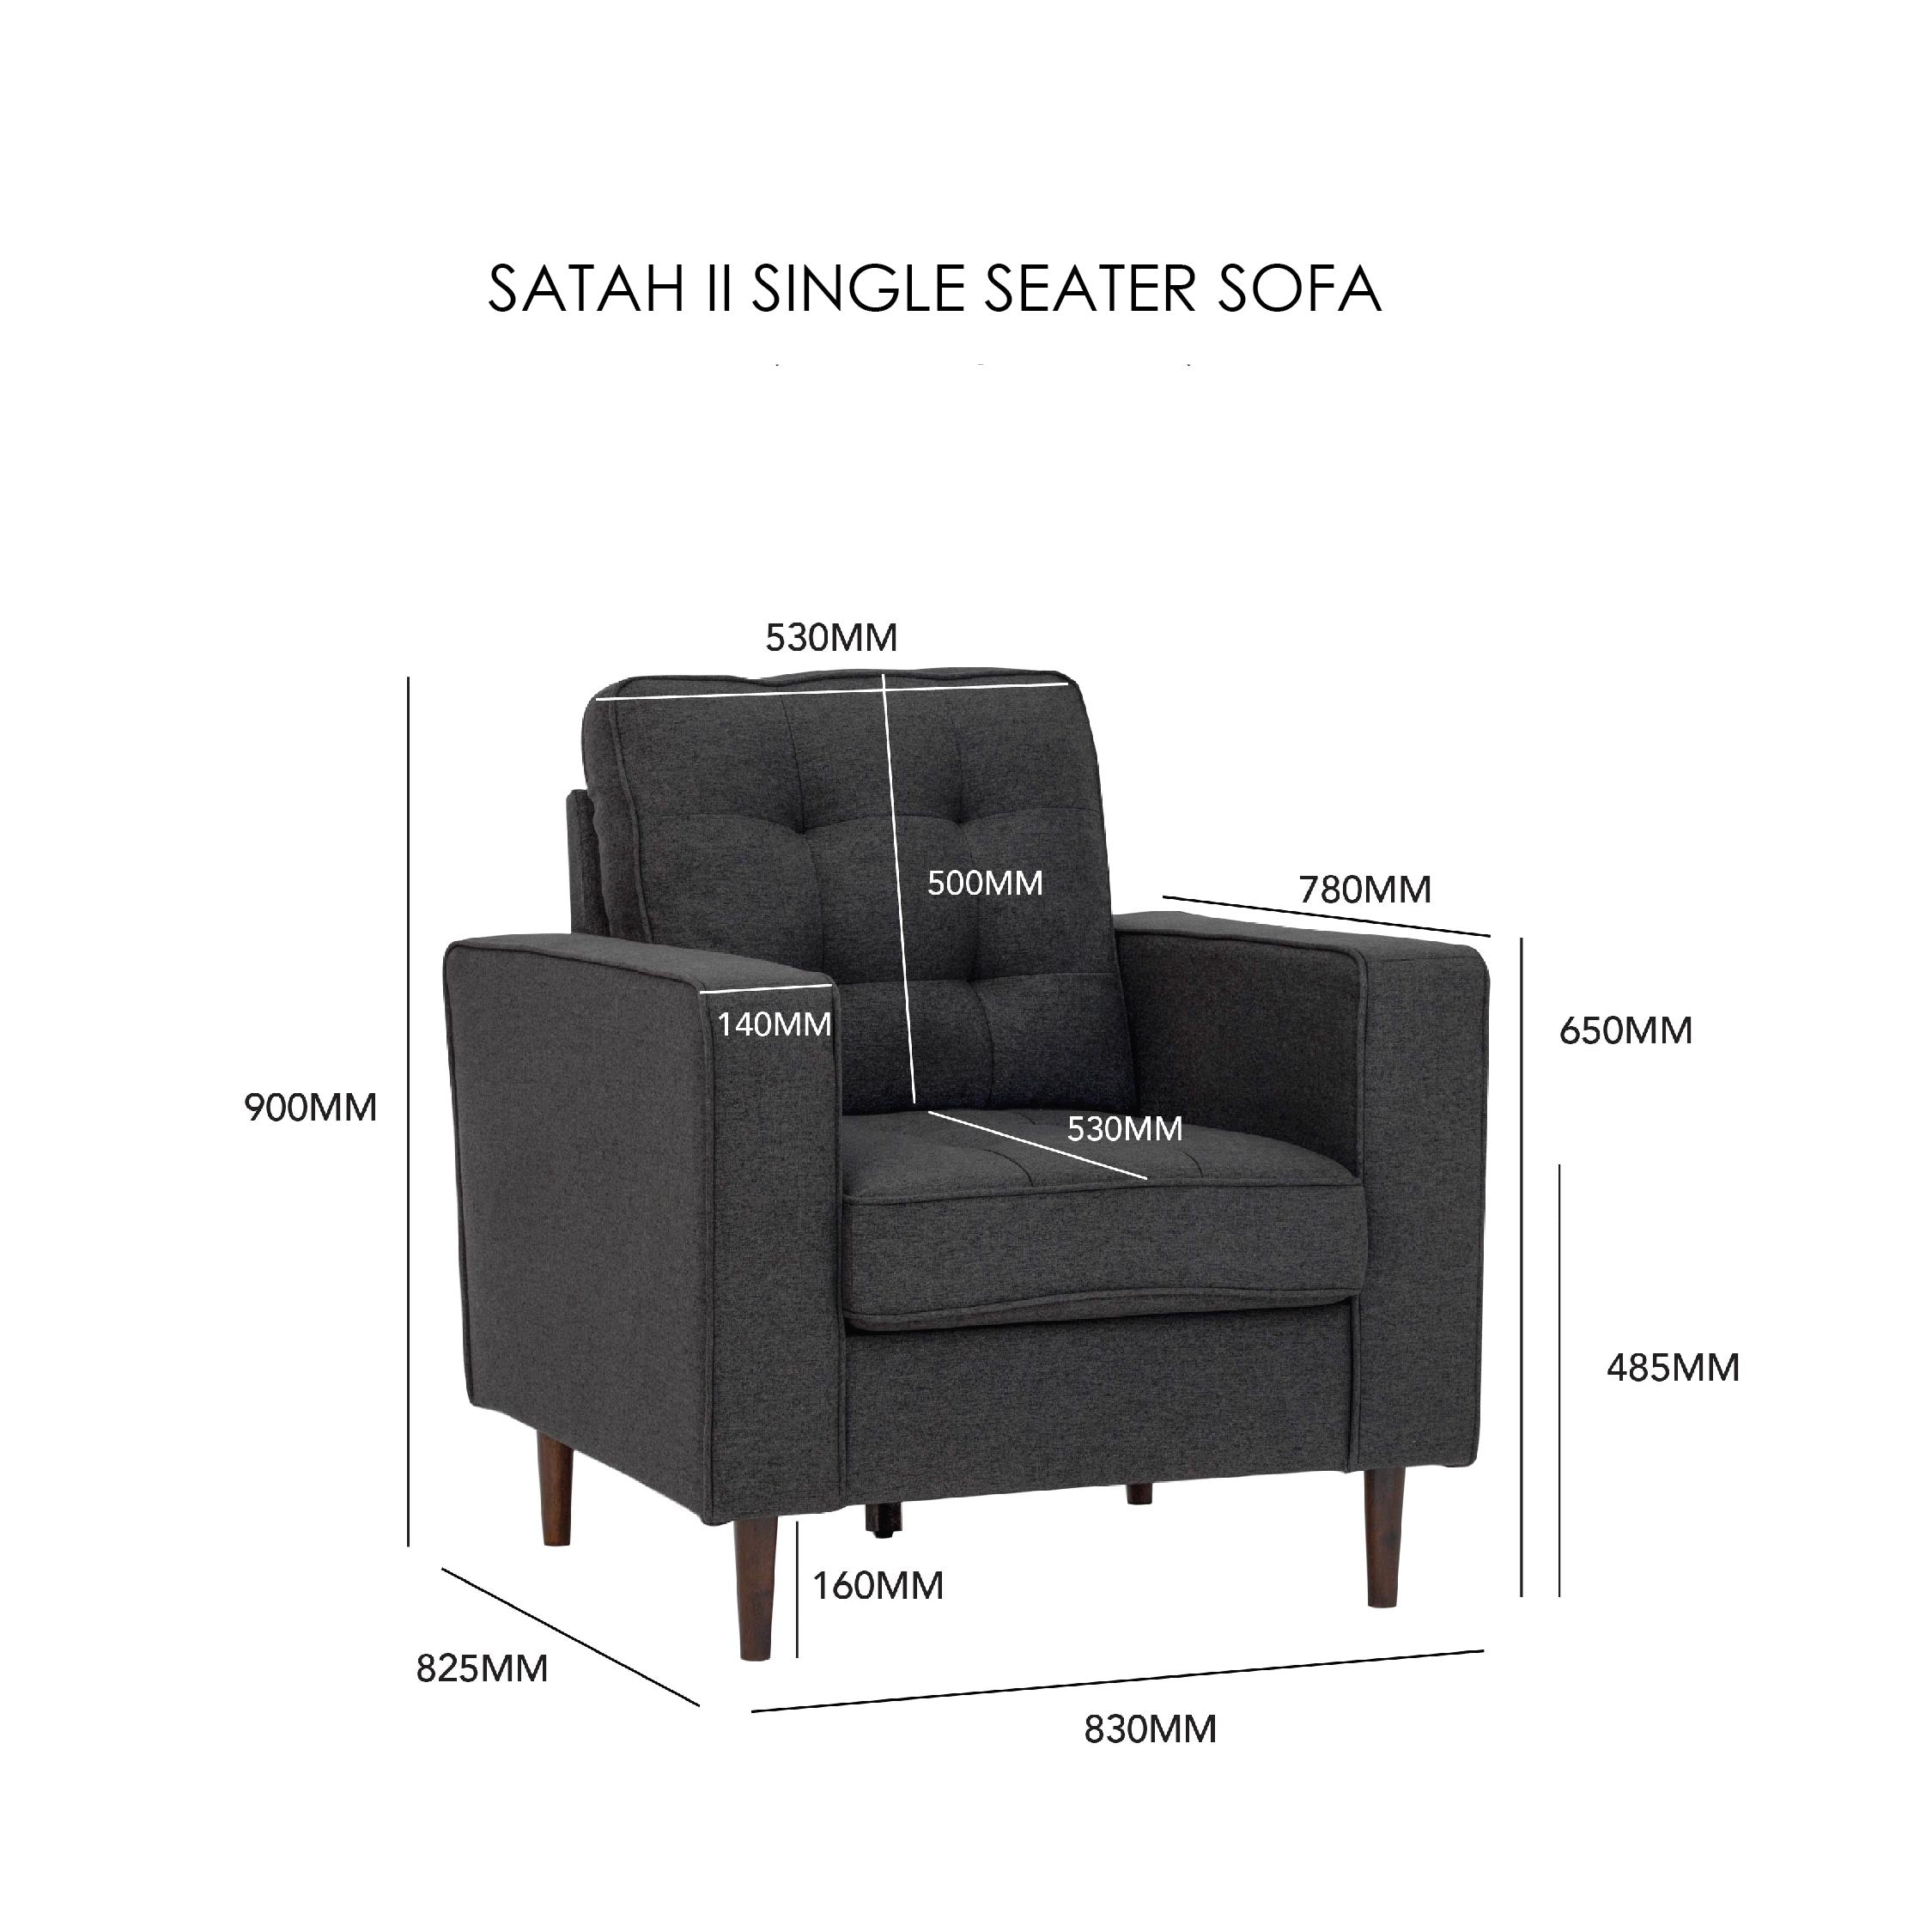 SATAH II Single Seater Sofa